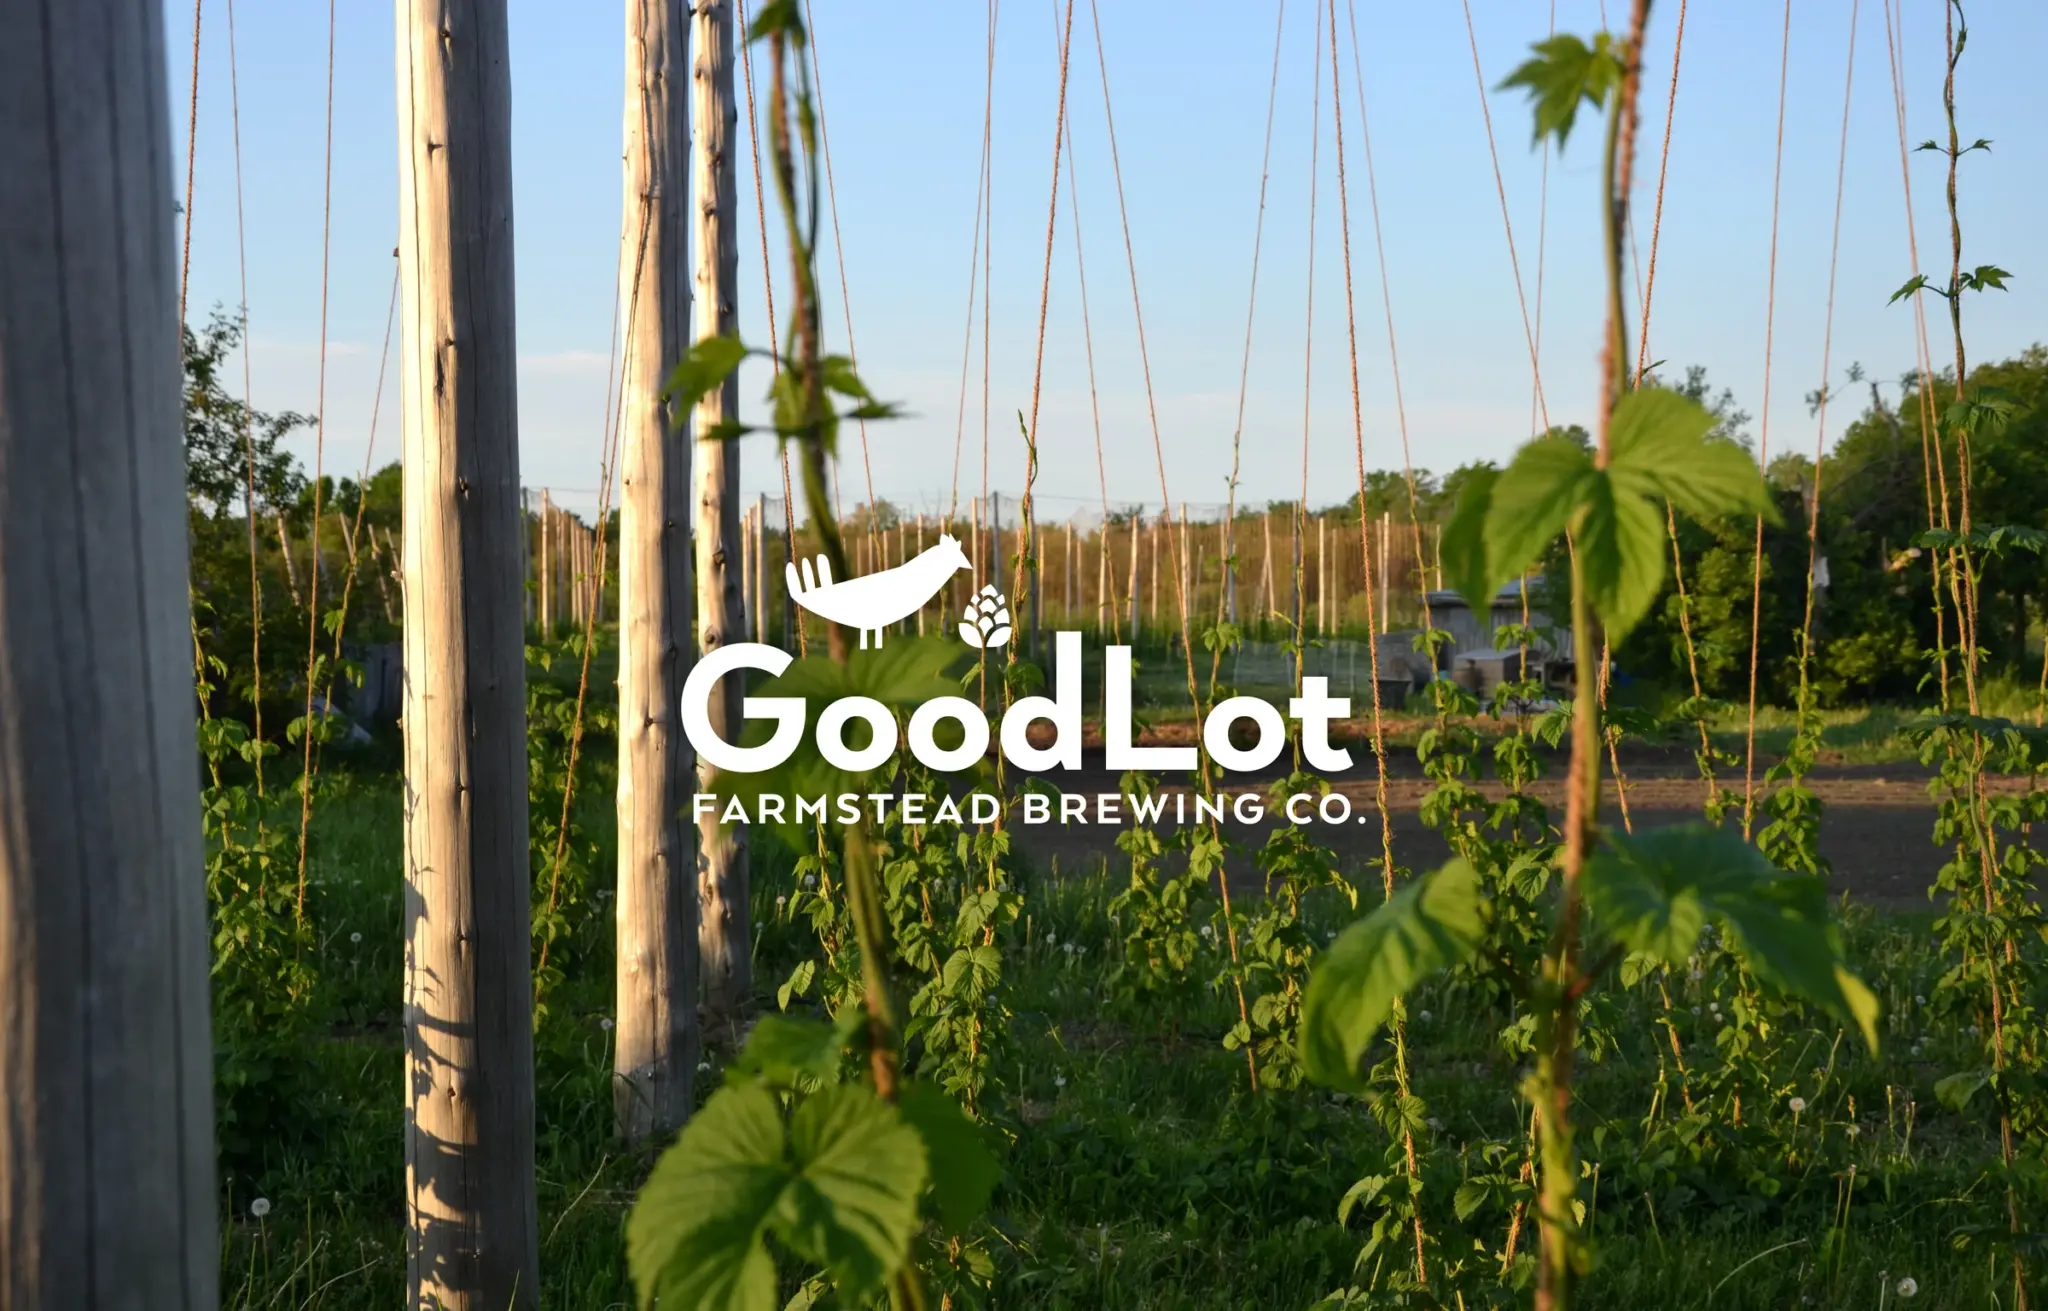 GoodLot Farmstead Brewing Co.